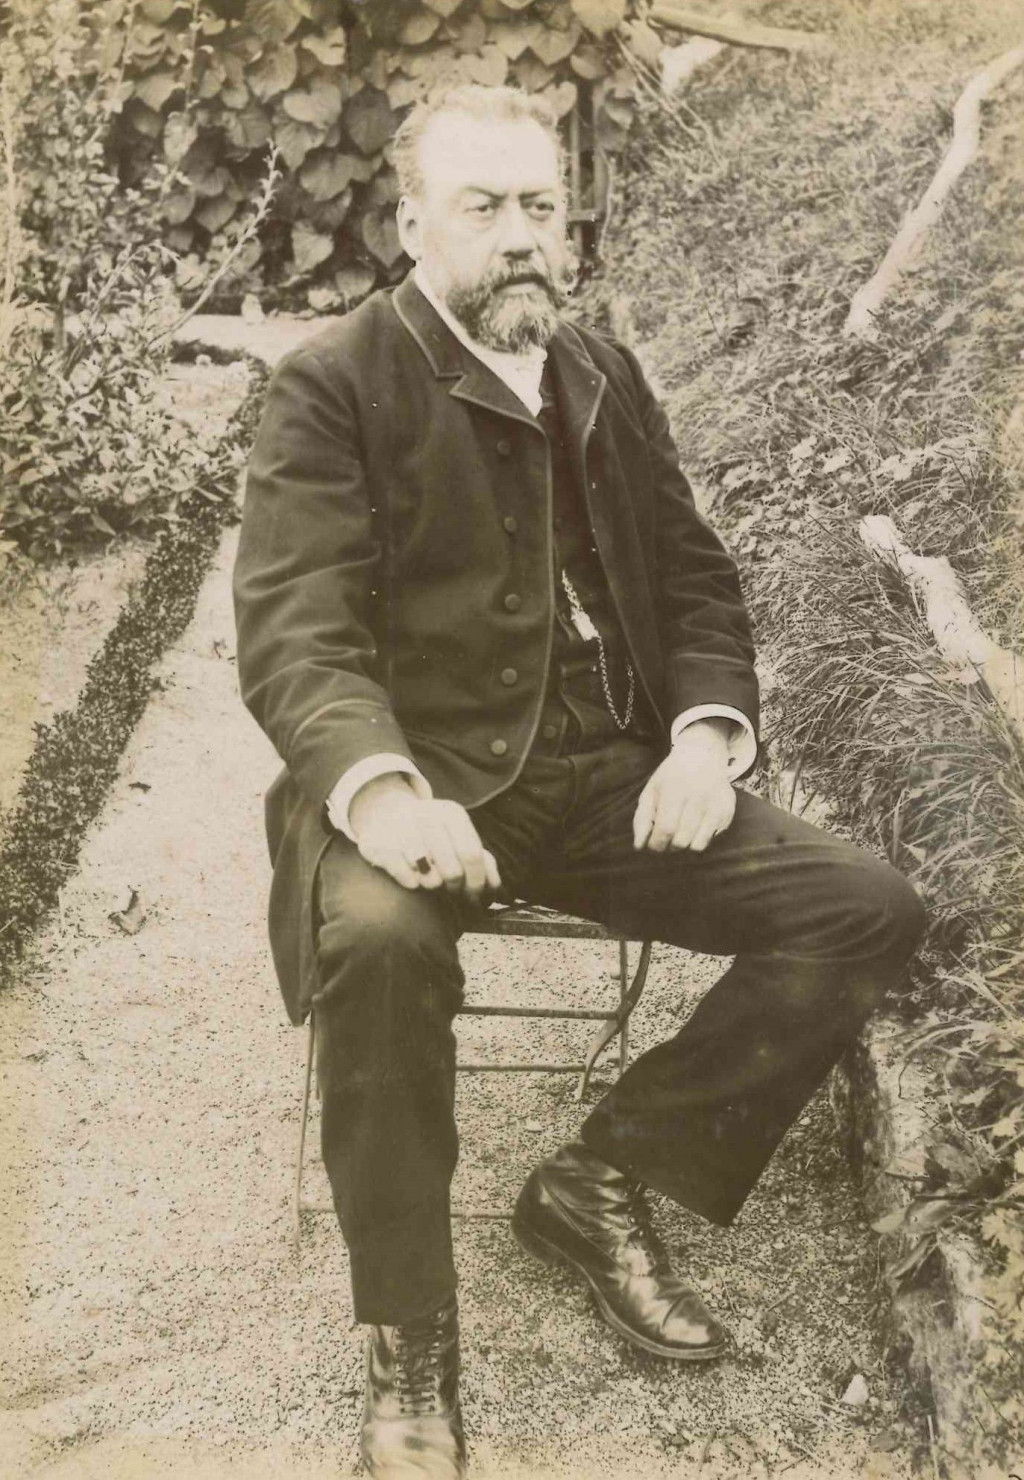 Photograph of Albert Boyer sitting in a garden